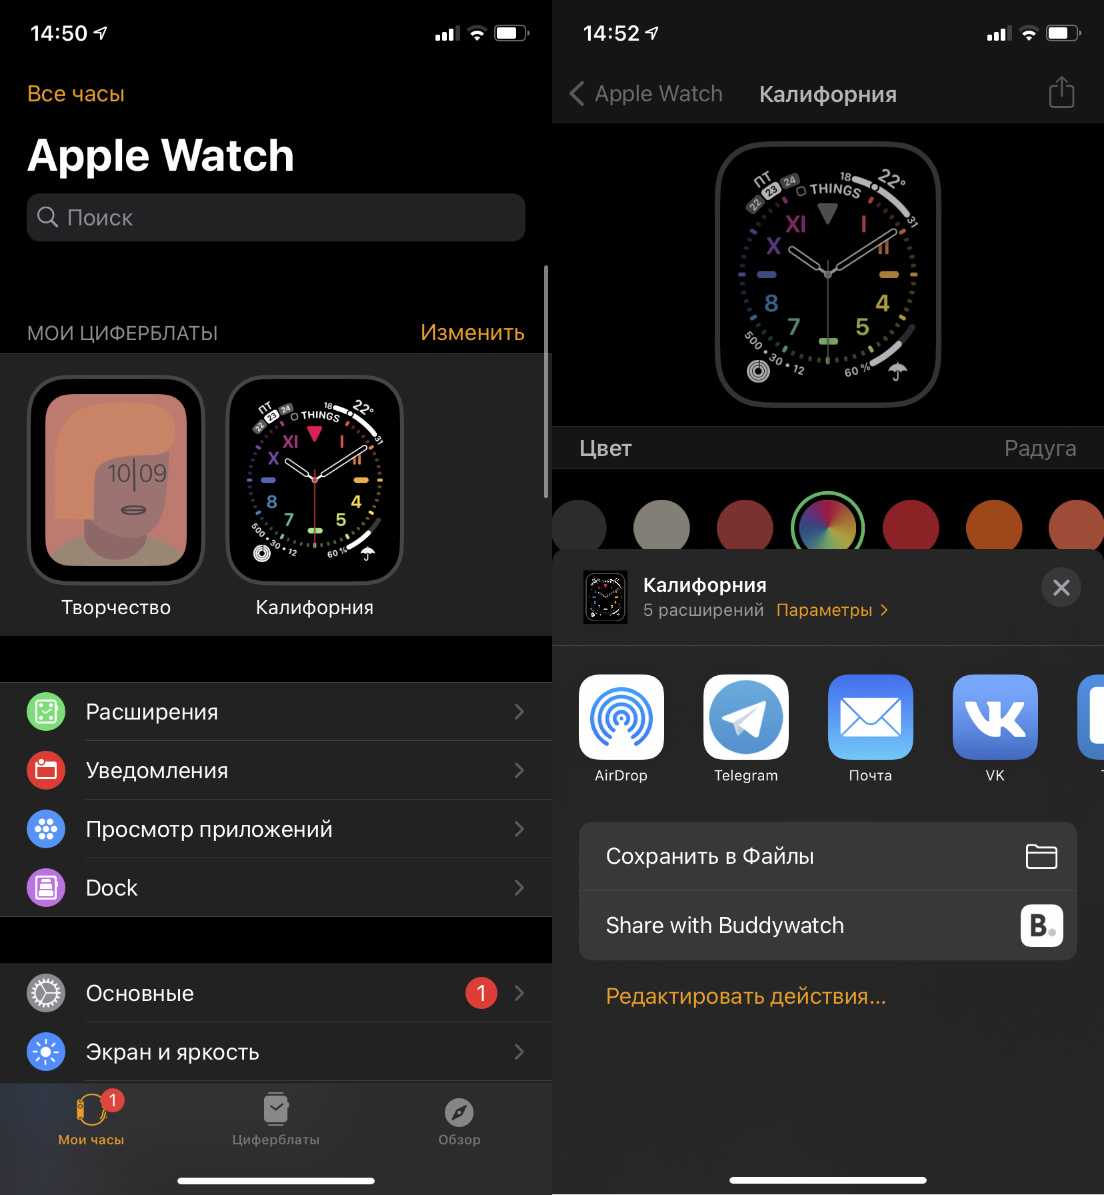 Приложения циферблатов для смарт часов. Циферблаты эпл вотч 4 сторонние. Циферблат Эппл вотч 7. Циферблатциферблаты на АПЛ воч. Как поменять циферблат на Apple watch 7.